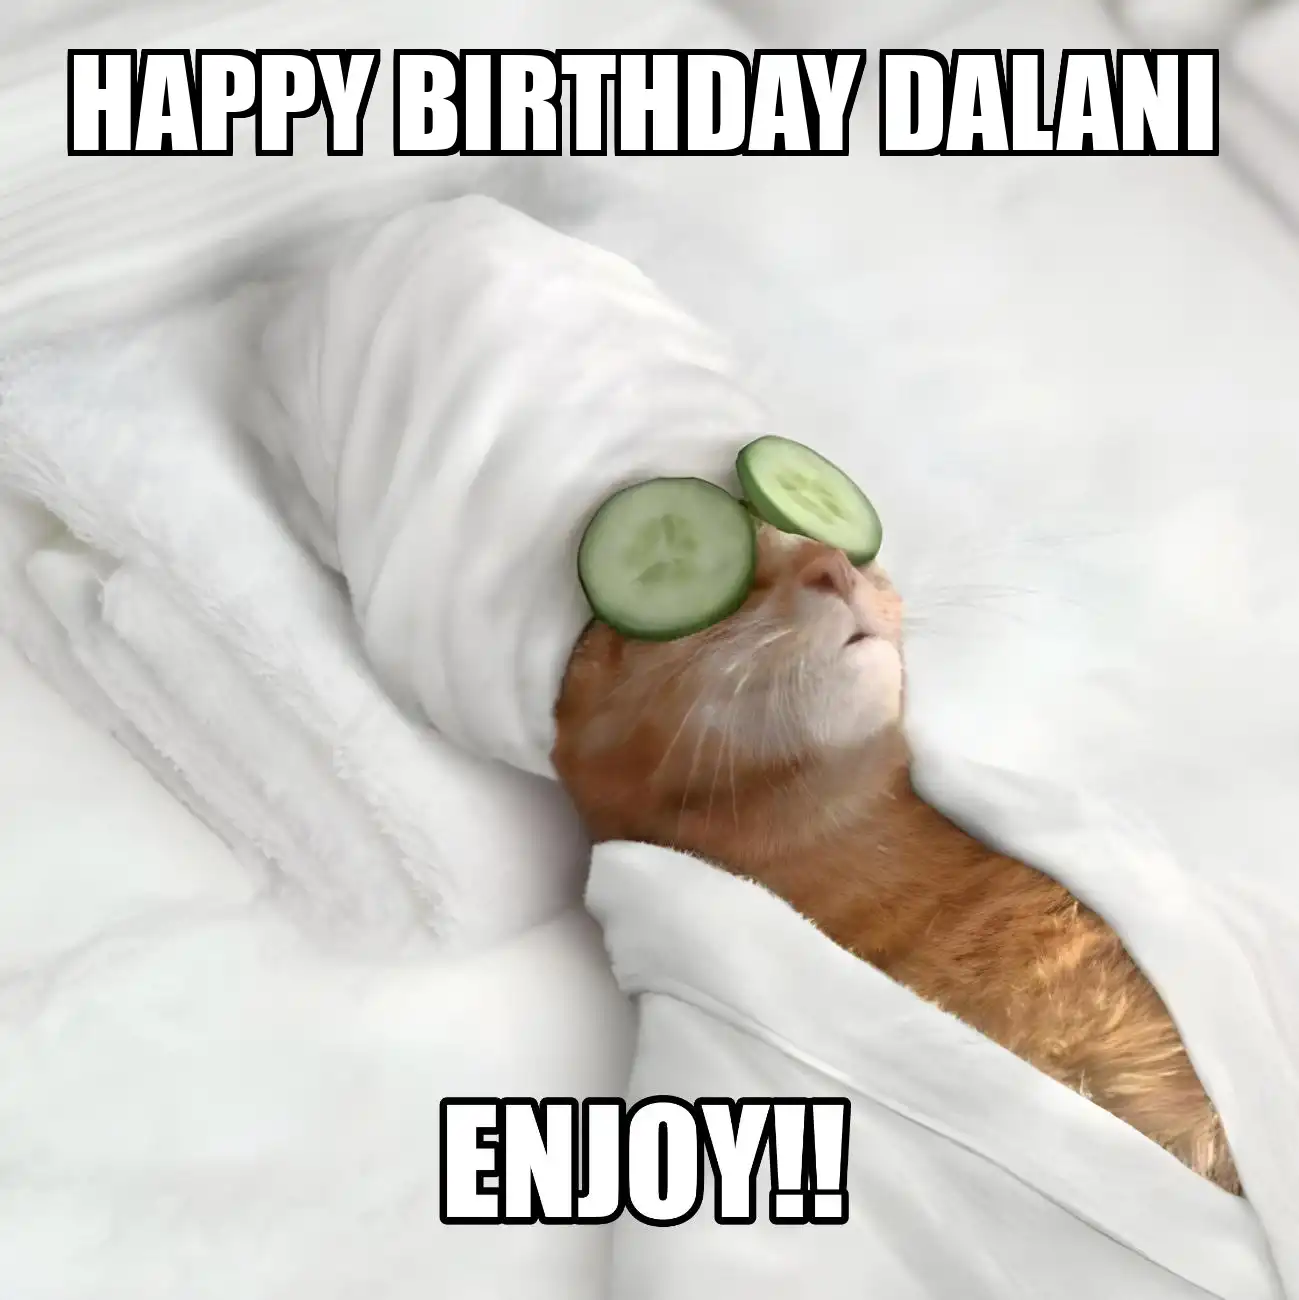 Happy Birthday Dalani Enjoy Cat Meme